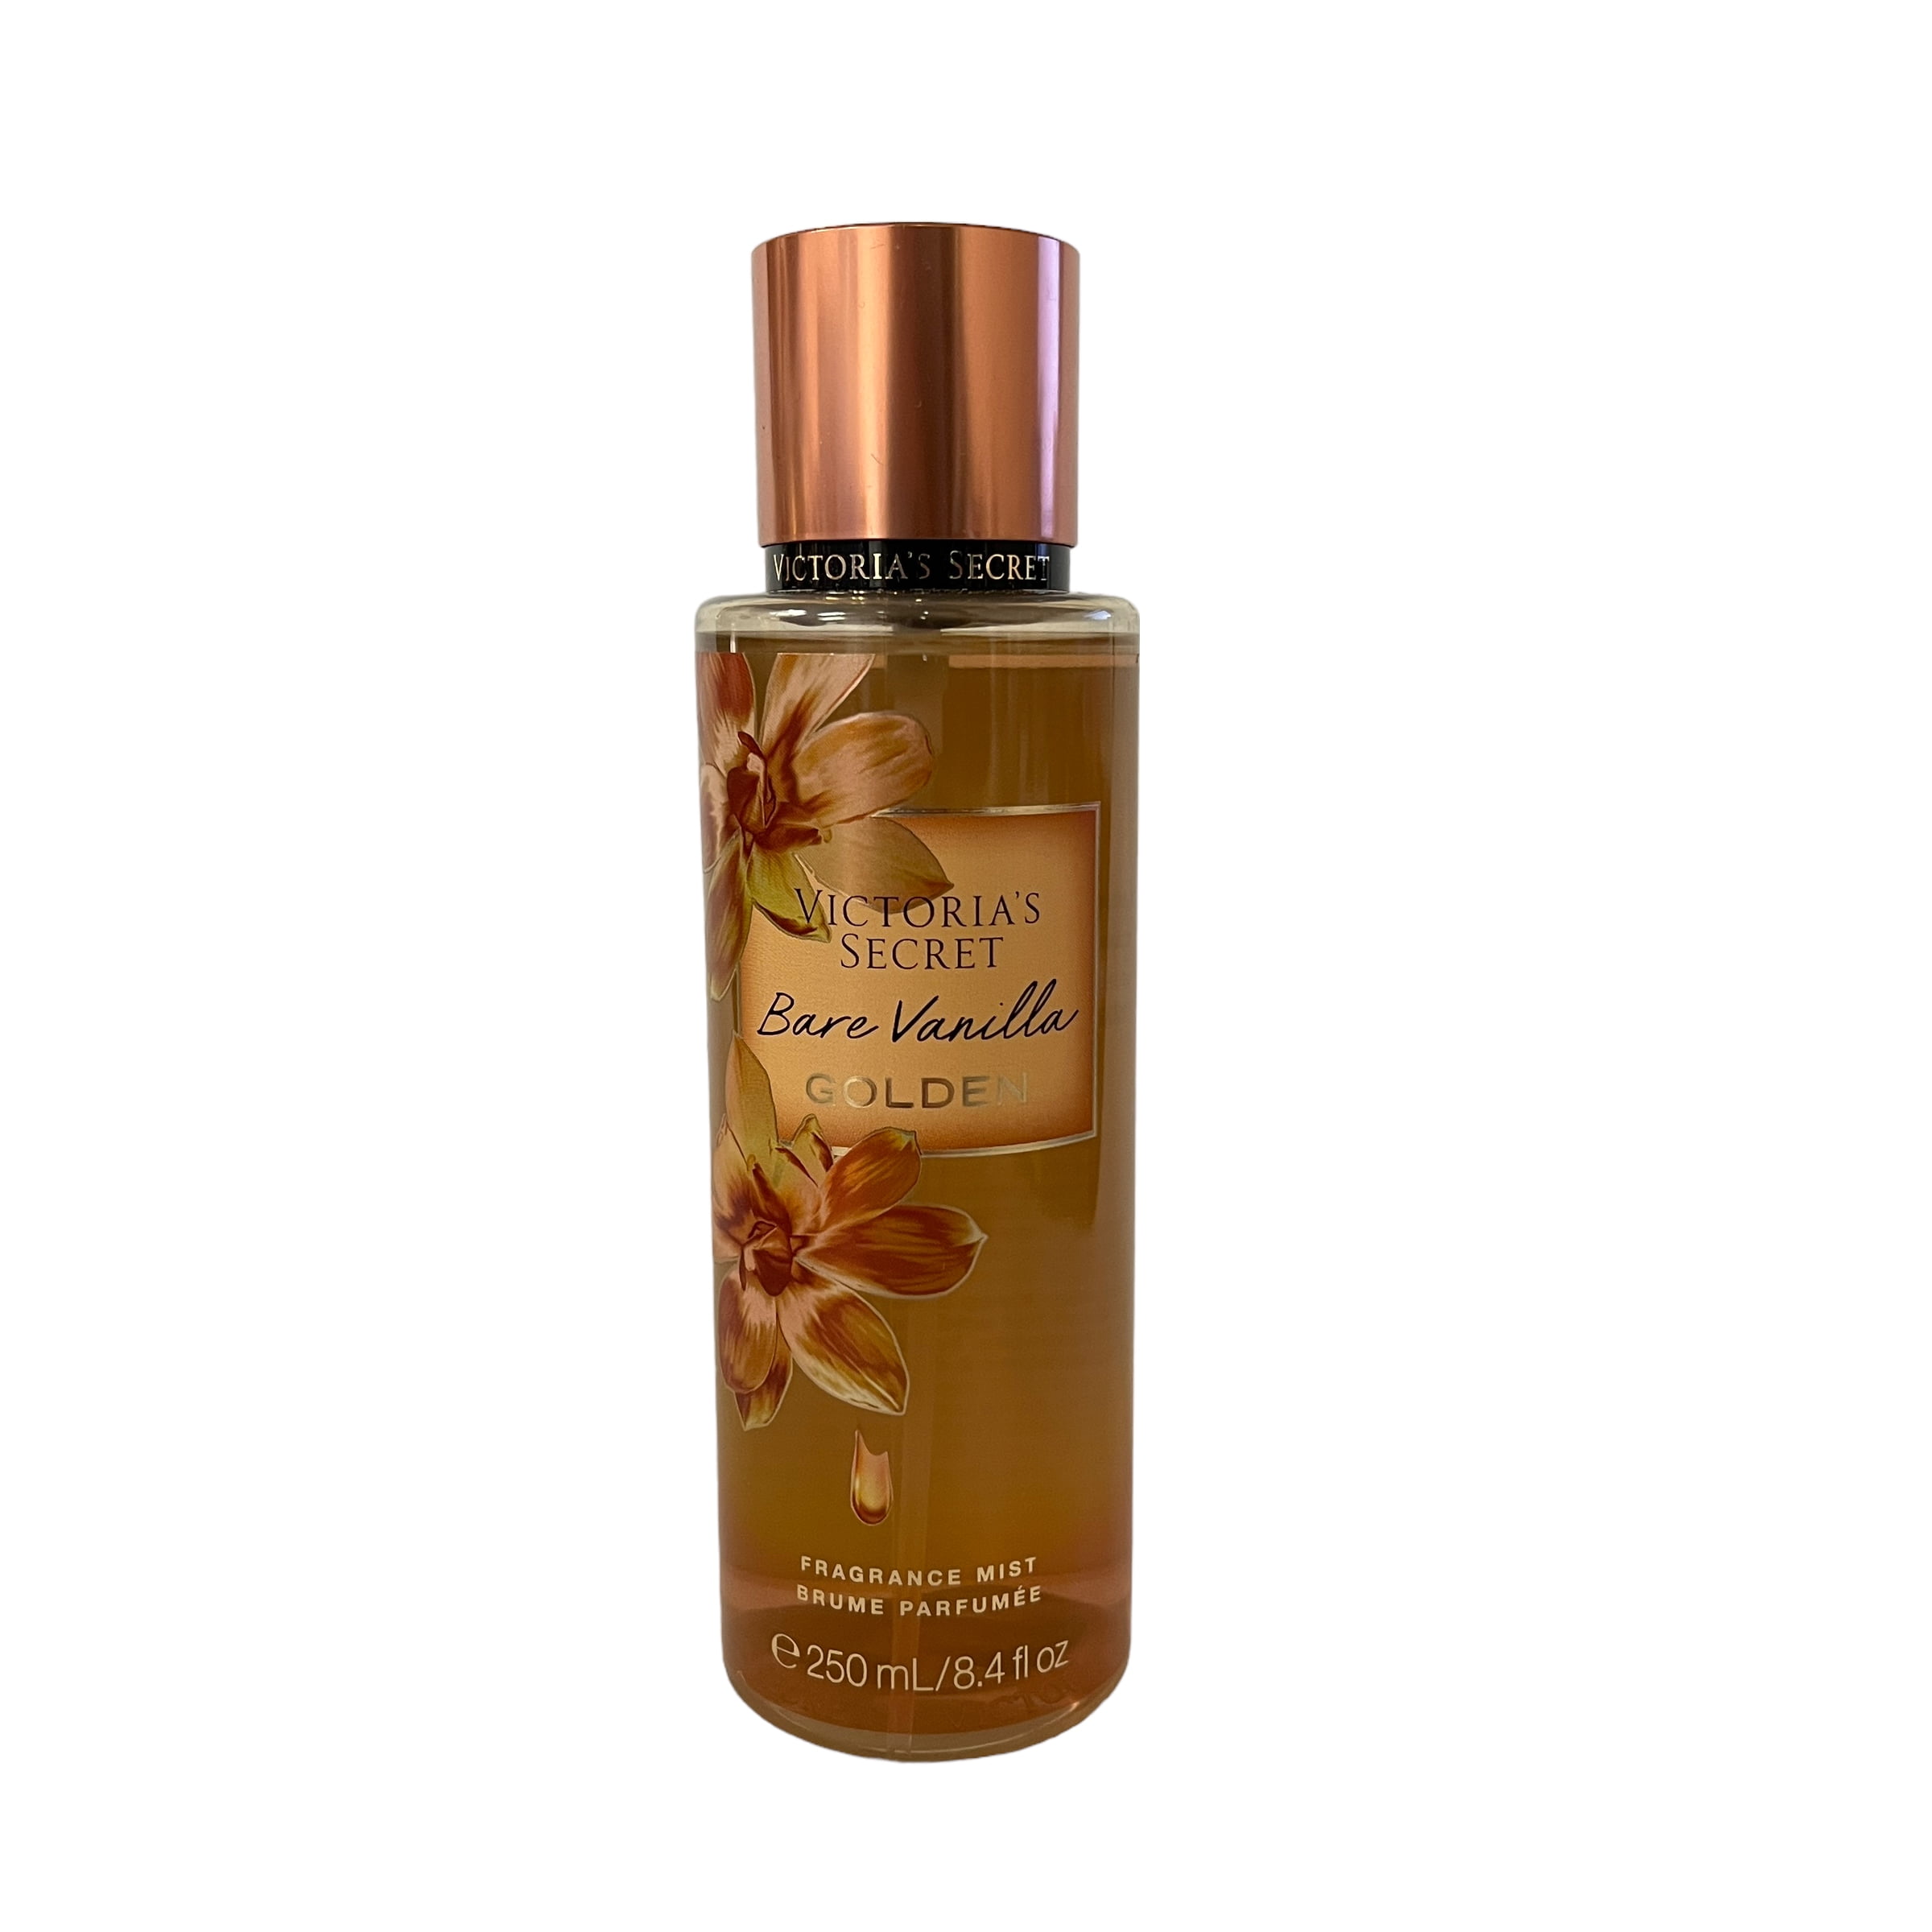 Victoria’s Secret Bare Vanilla Golden Fragrance Mist 8.4 fl oz